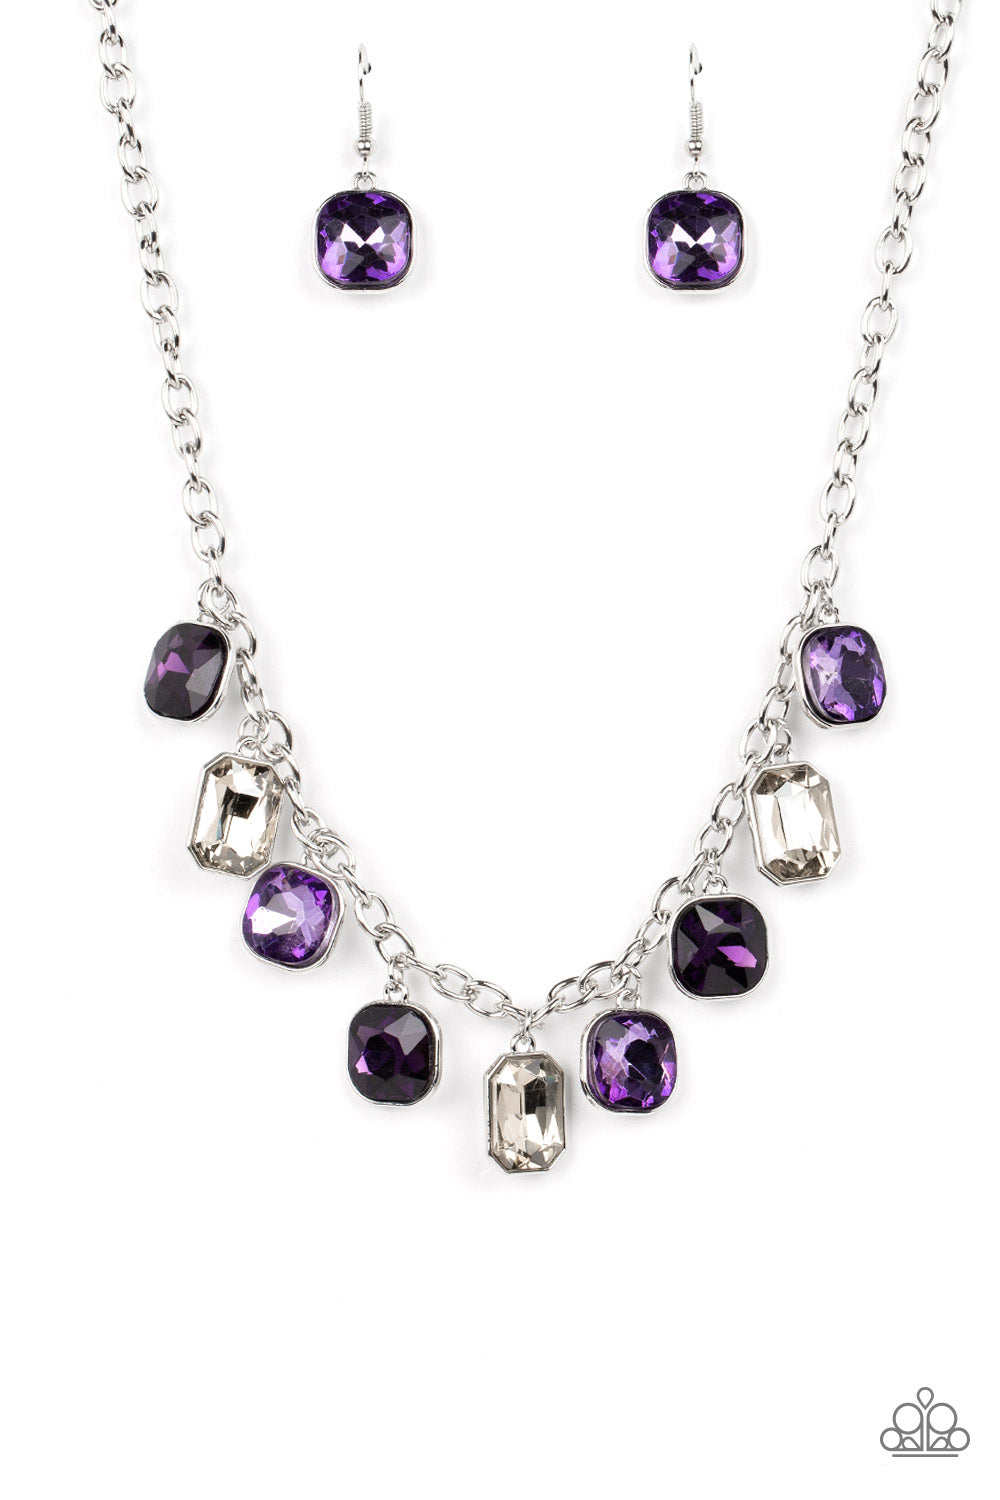 five-dollar-jewelry-best-decision-ever-purple-necklace-paparazzi-accessories